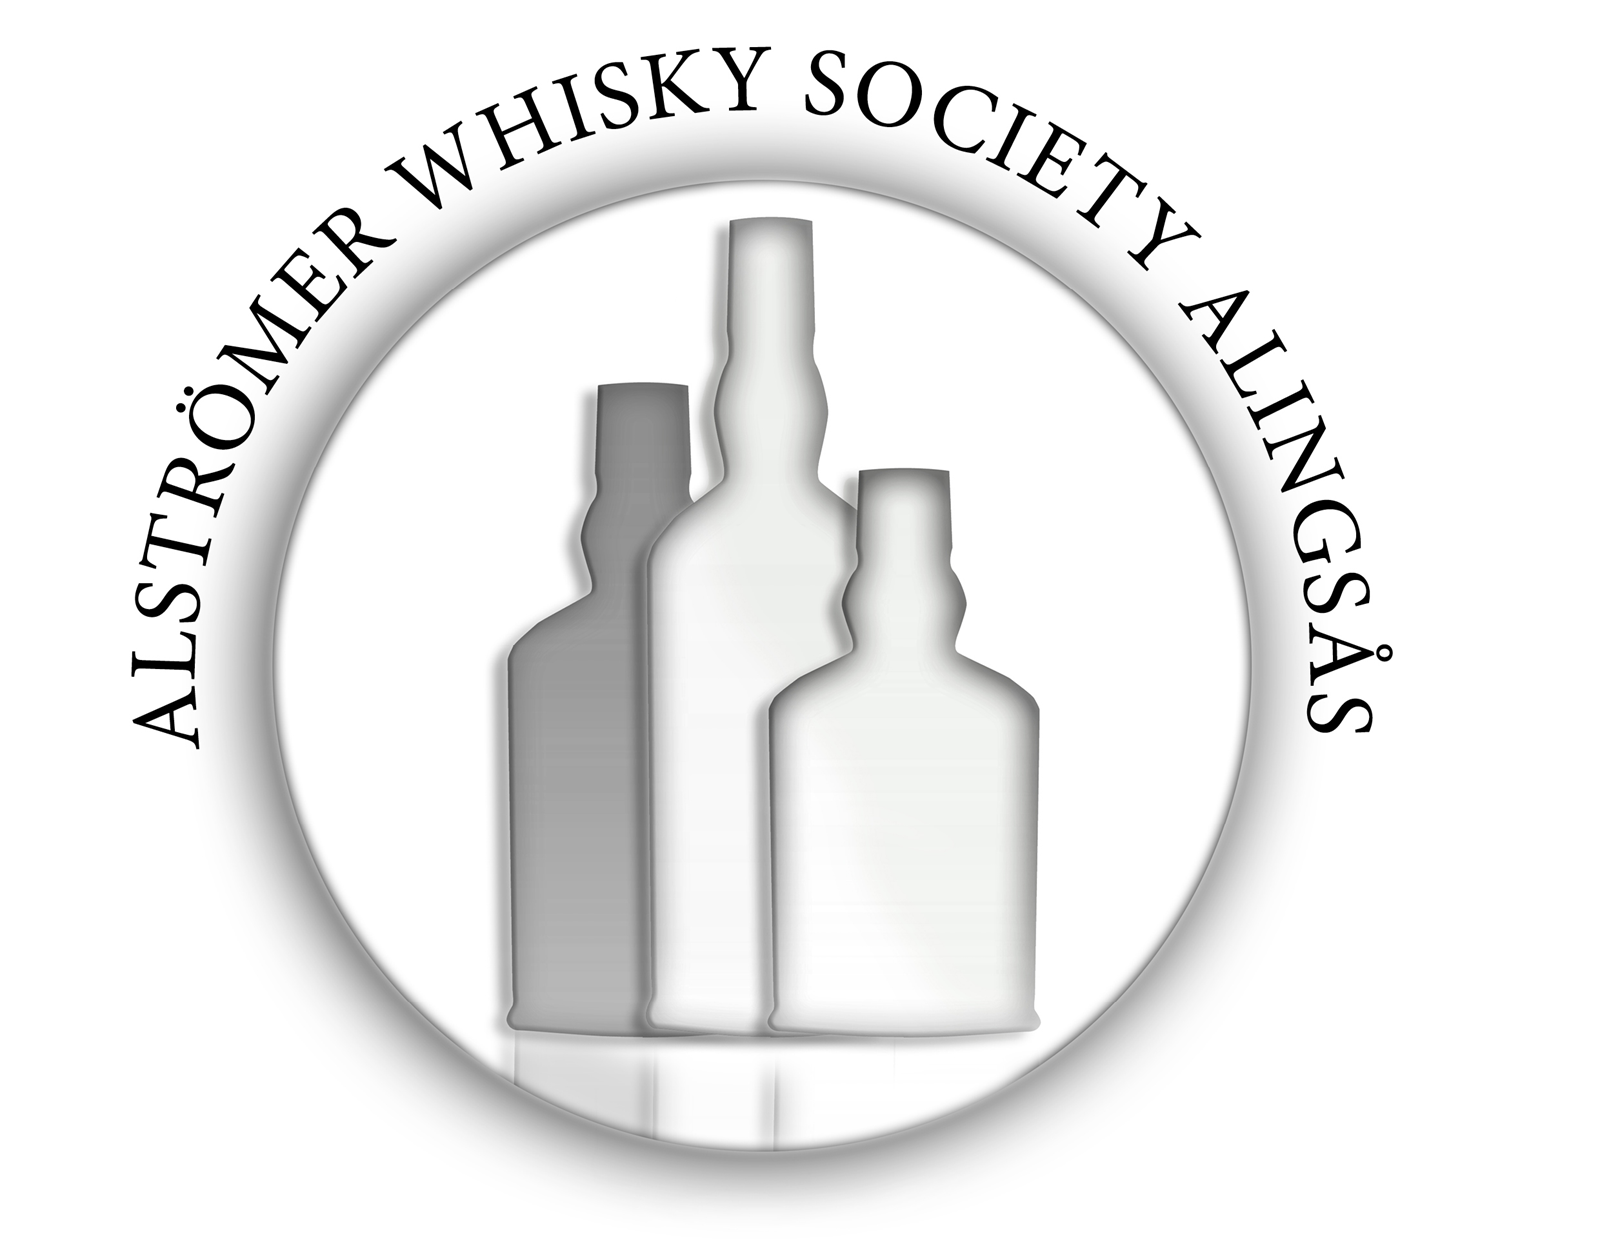 Alströmer Whisky Society Alingsås